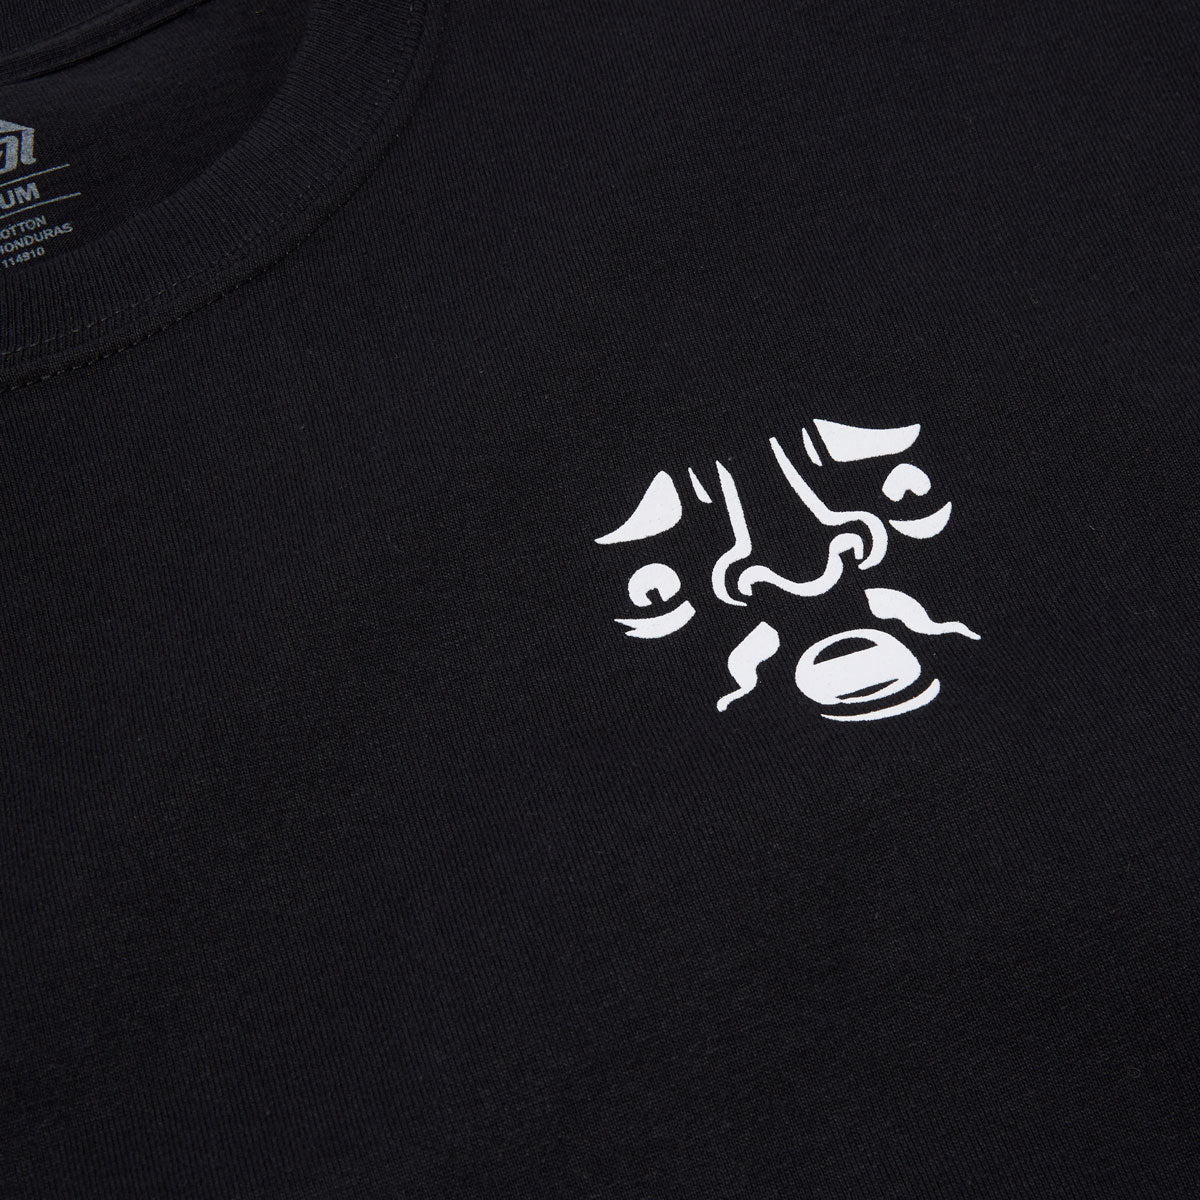 Lakai Esow Face T-Shirt - Black image 2